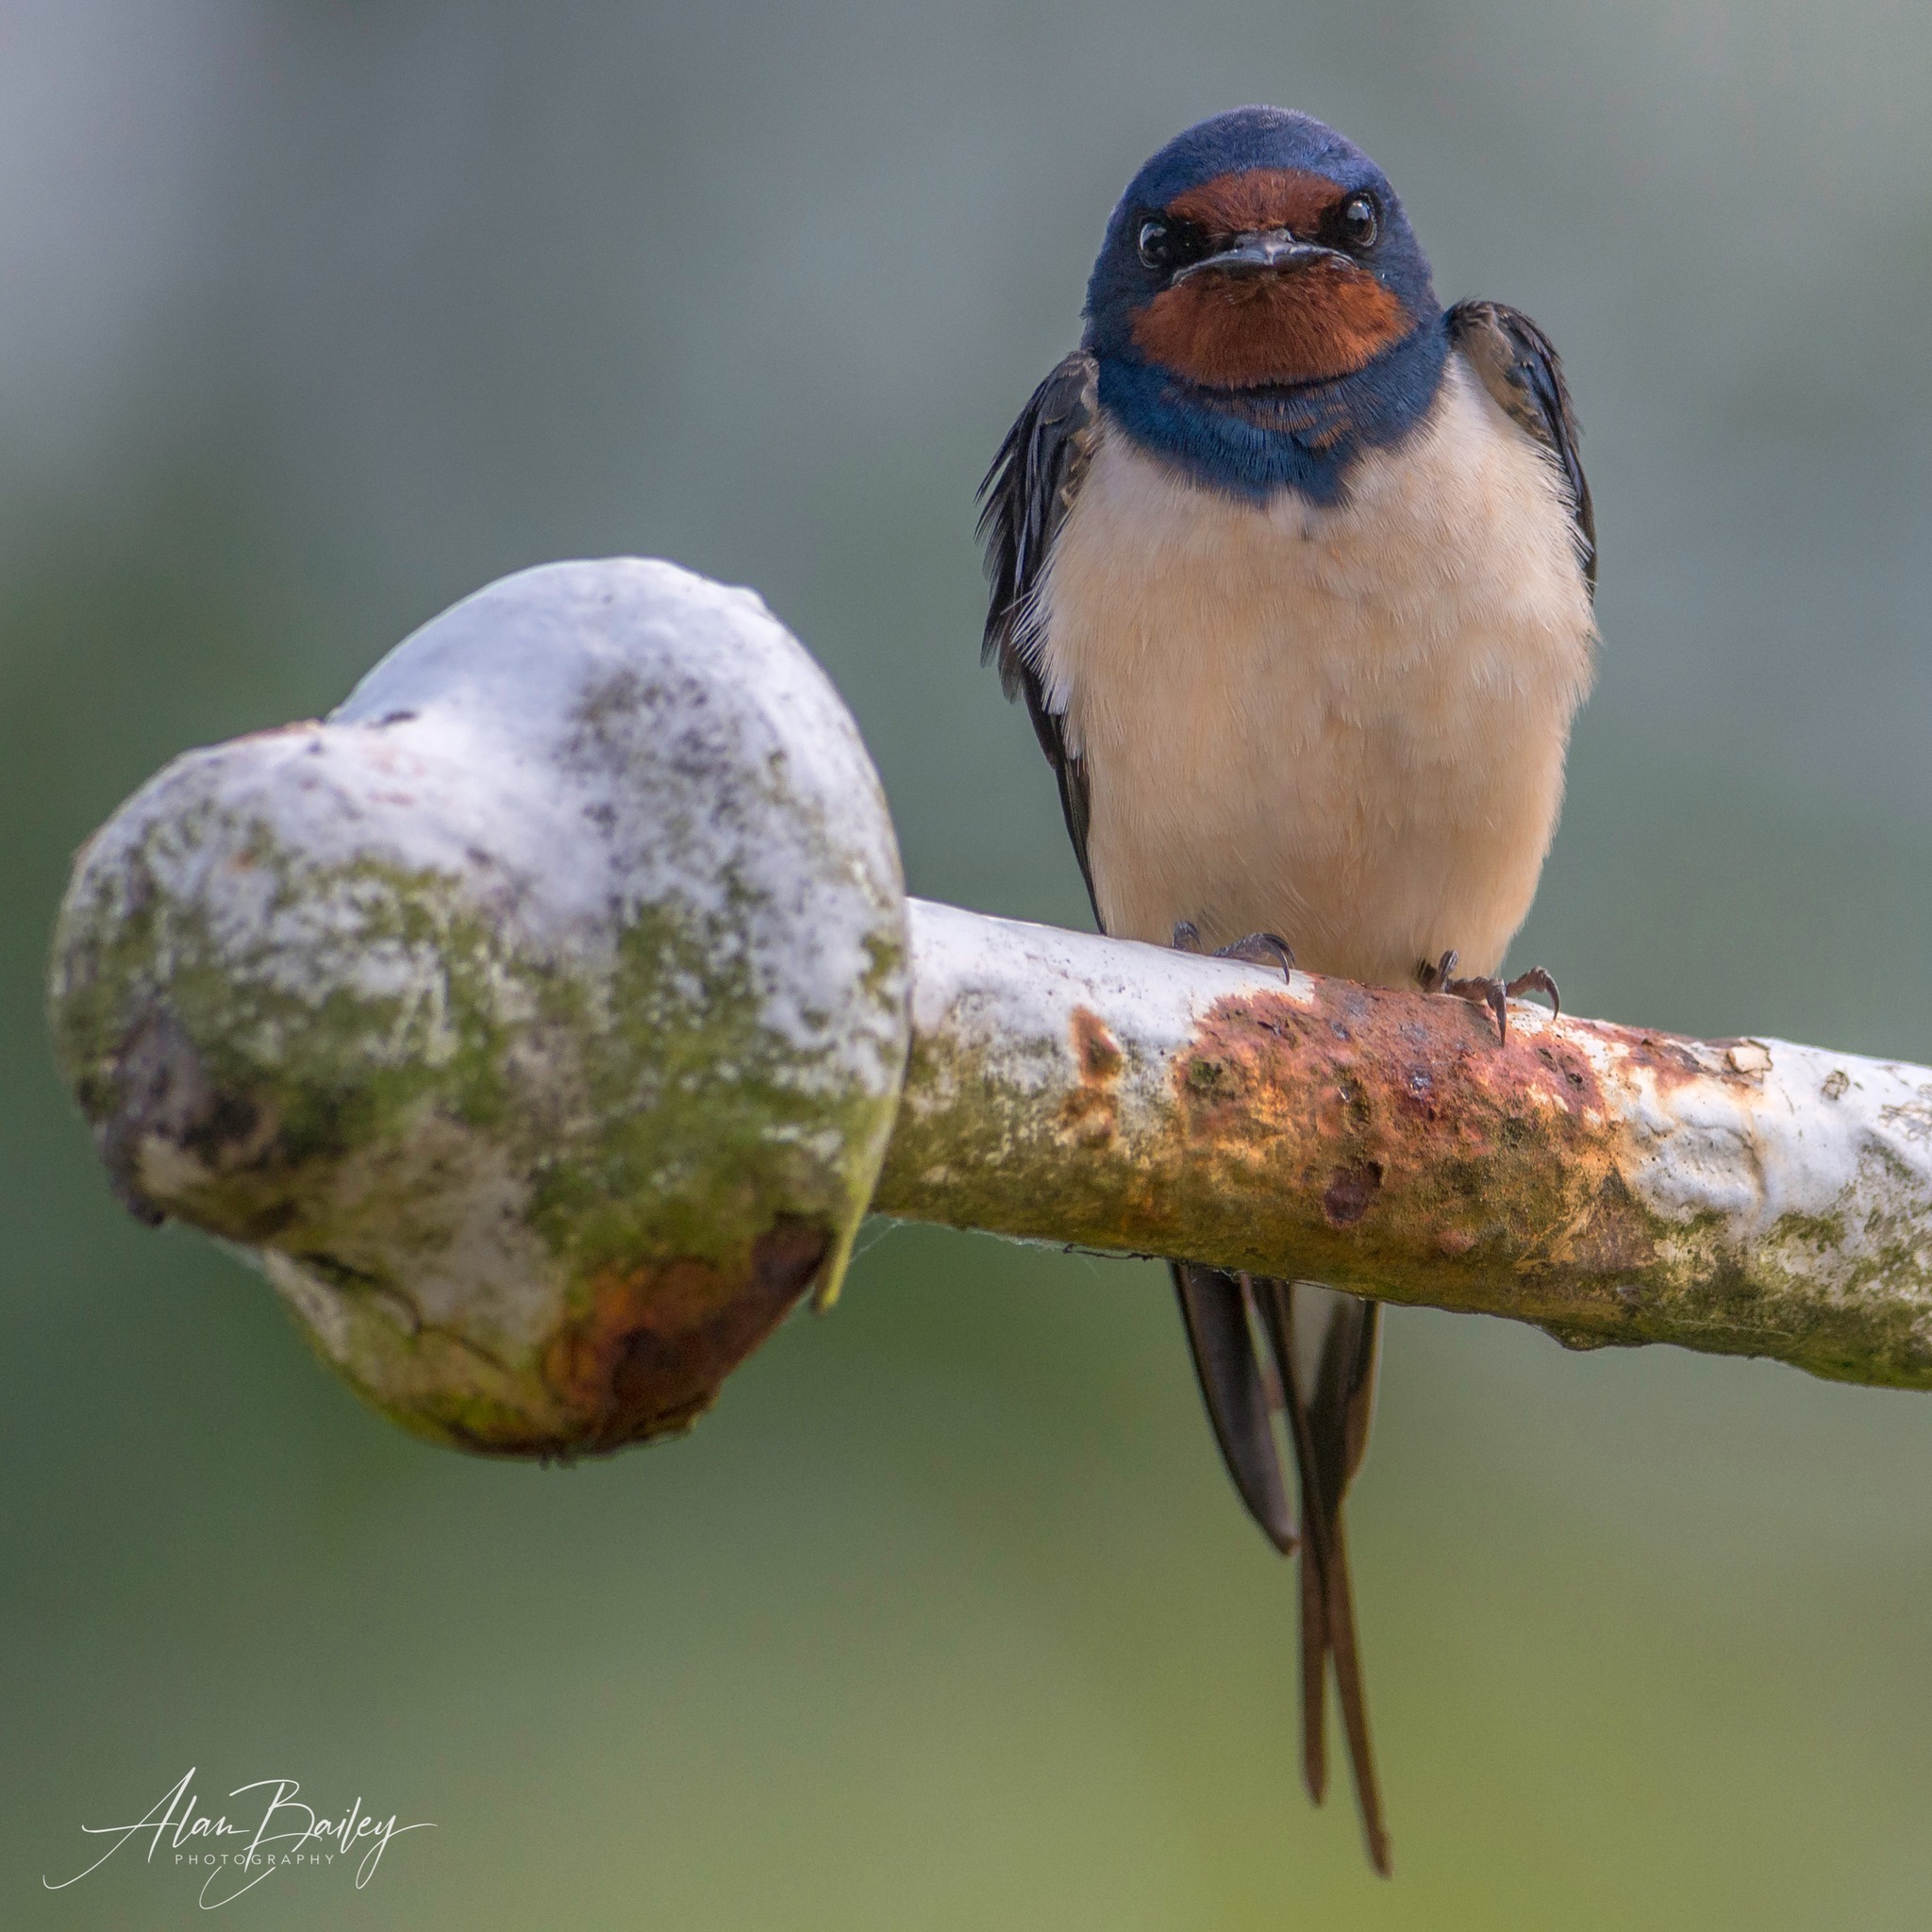 A grumpy swallow by Alan Bailey